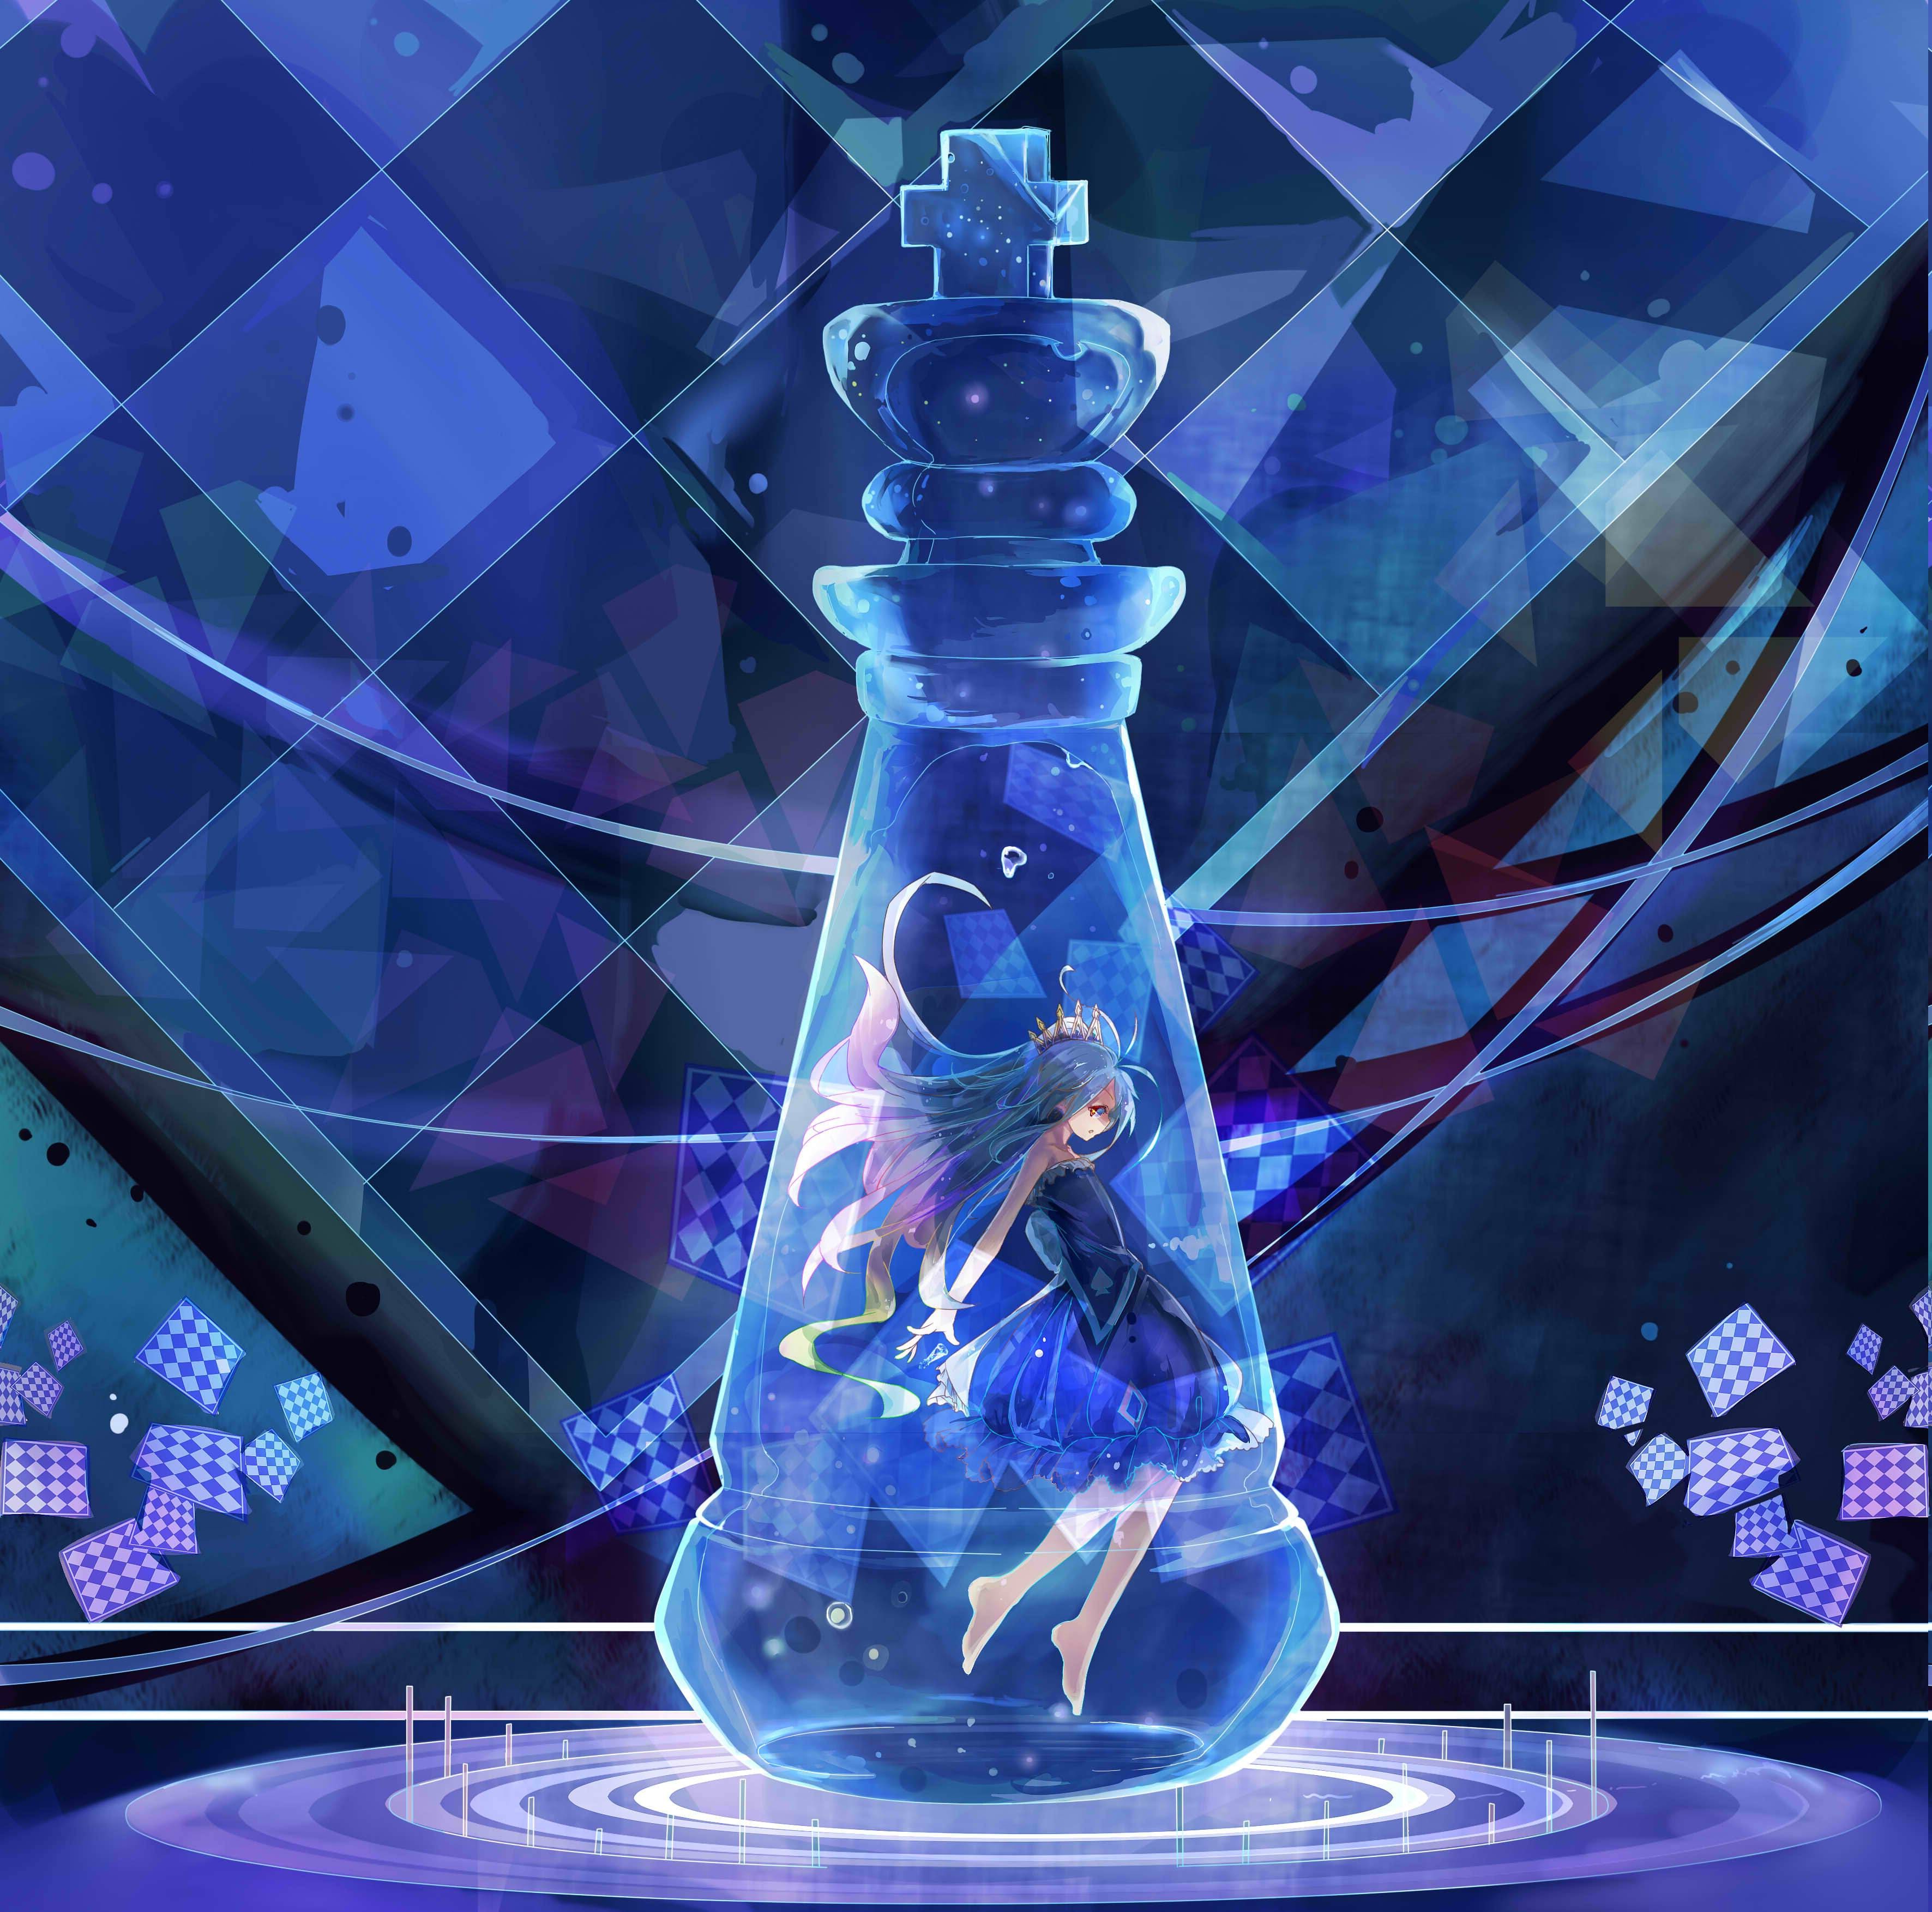 crystal fantasy game download gallery